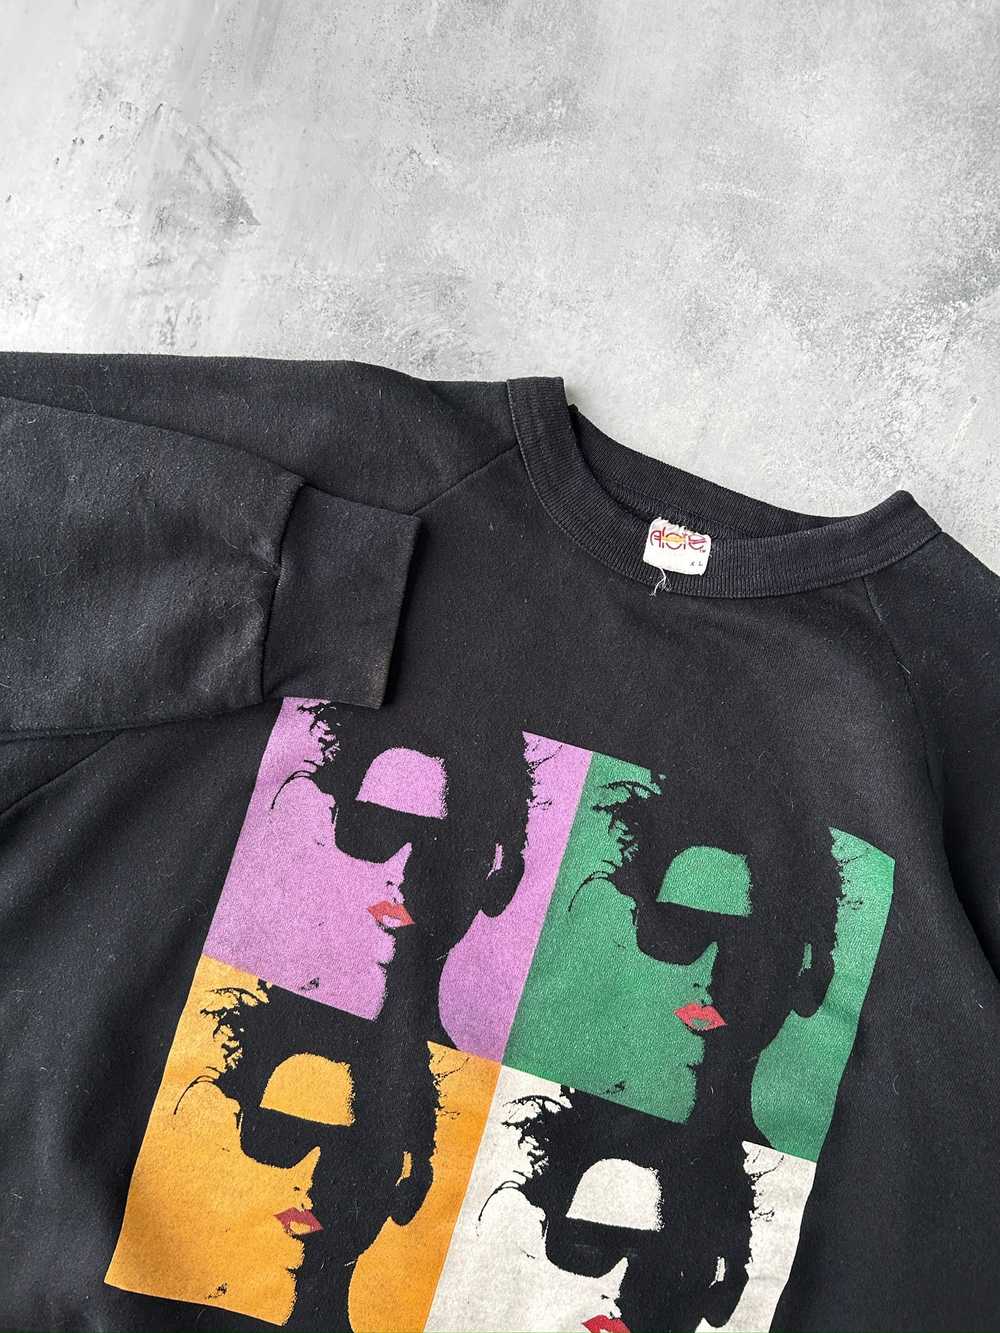 The Limited Pop Art Sweatshirt 80's - Large / XL - image 2